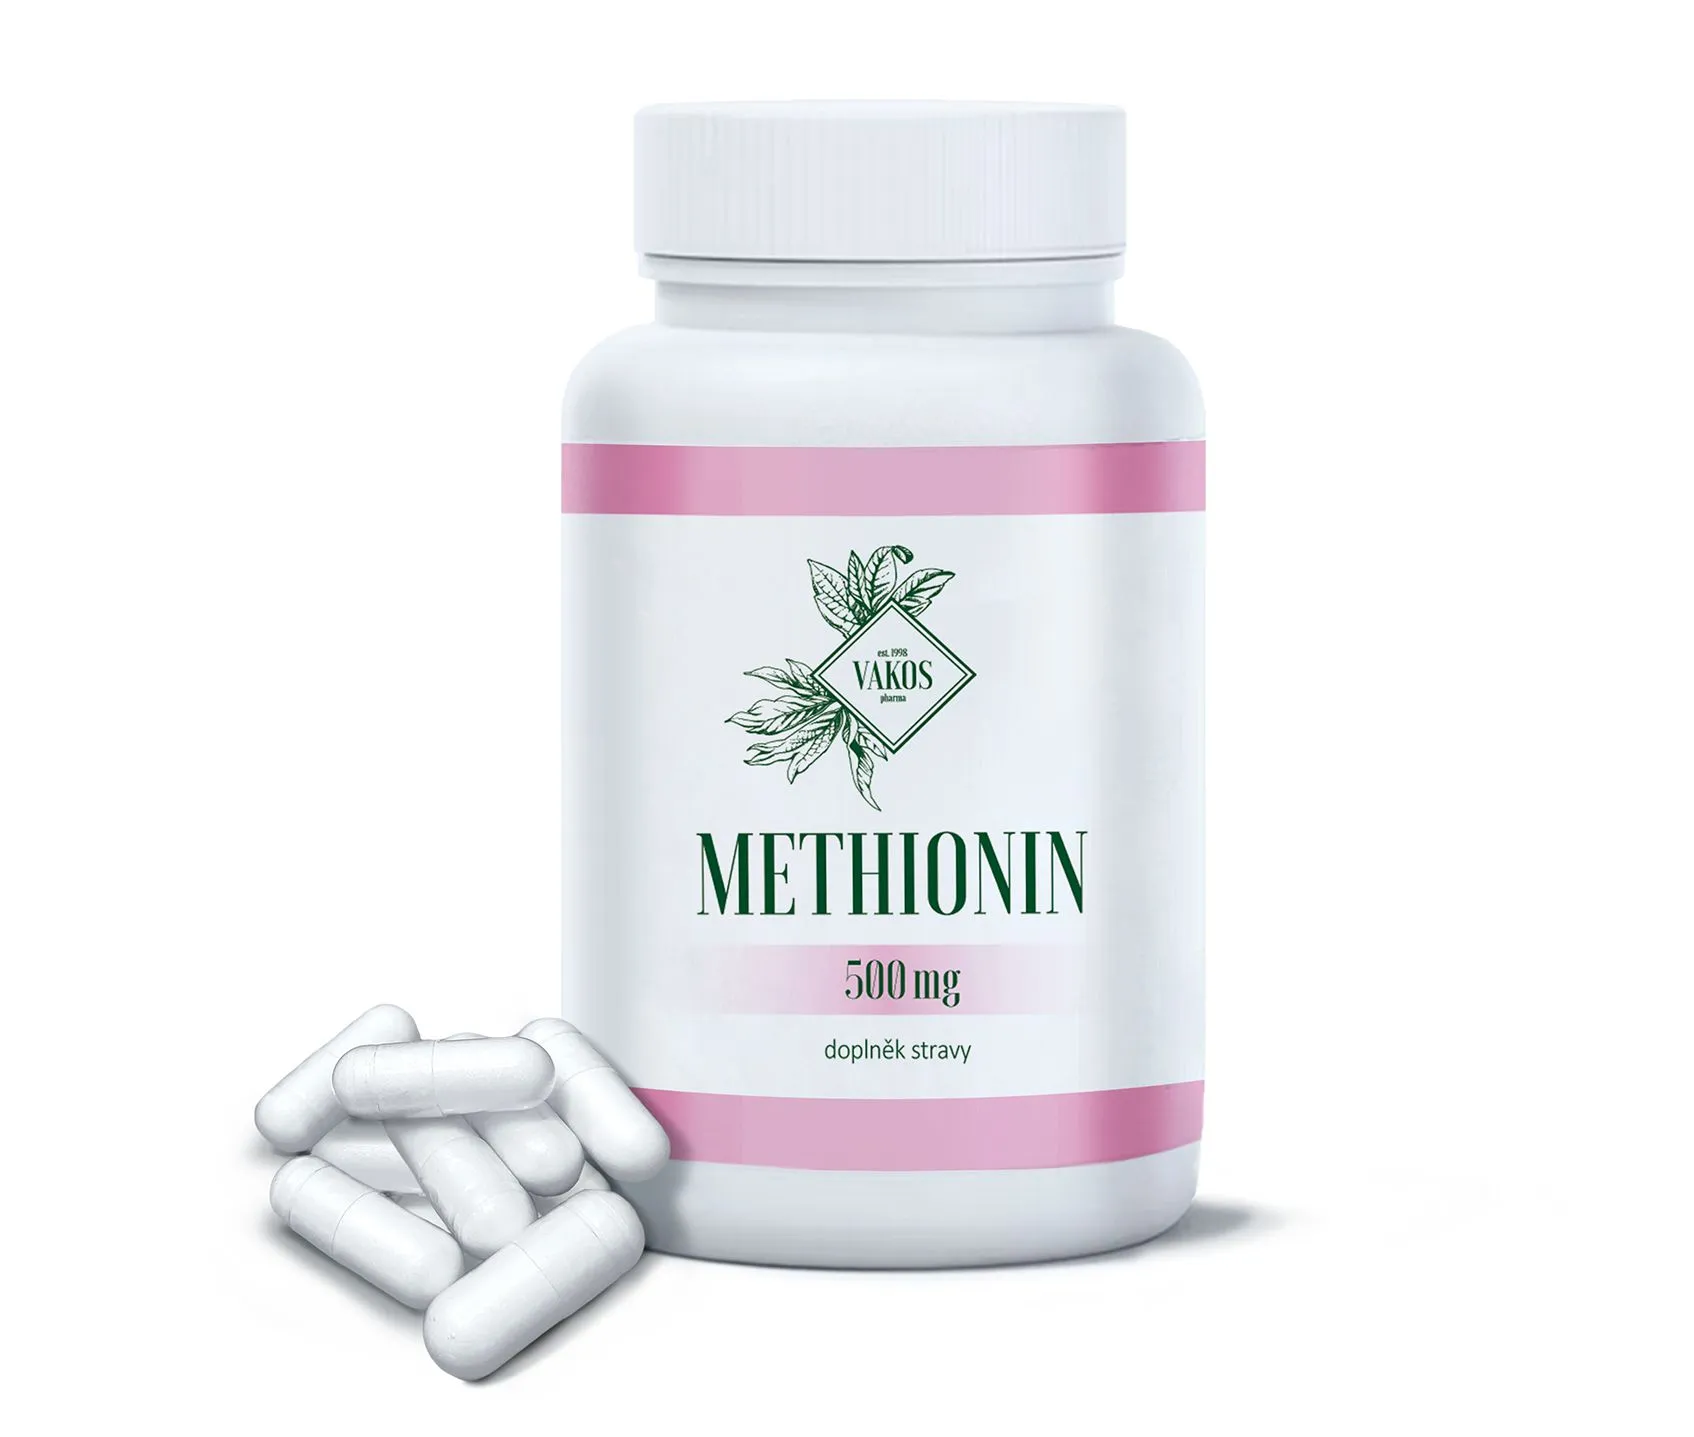 VAKOS Methionin 500 mg 100 kapslí